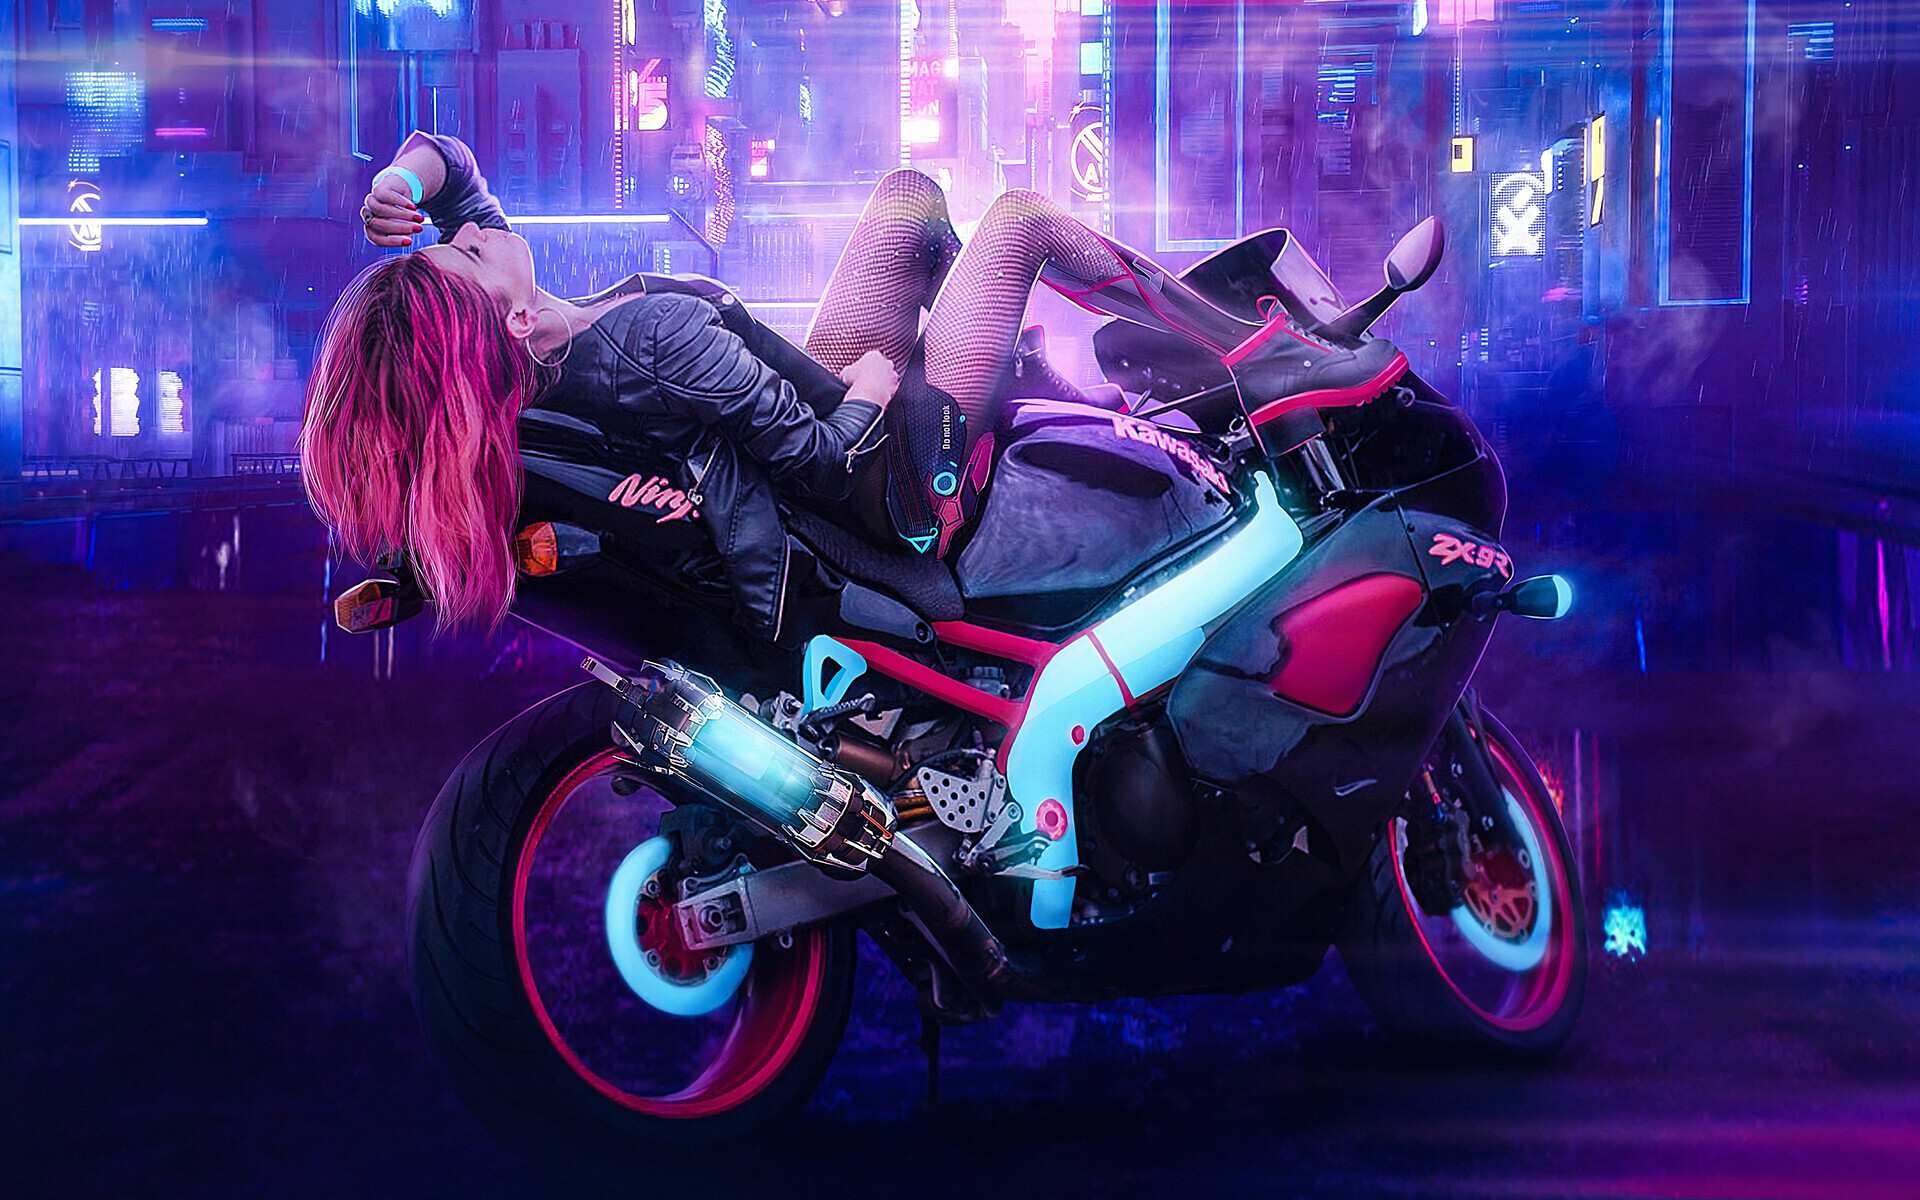 Girls and Motorcycles: Powerful sports bike, Biker chick, Women’s motorcycle leather jacket, Kawasaki. 1920x1200 HD Wallpaper.